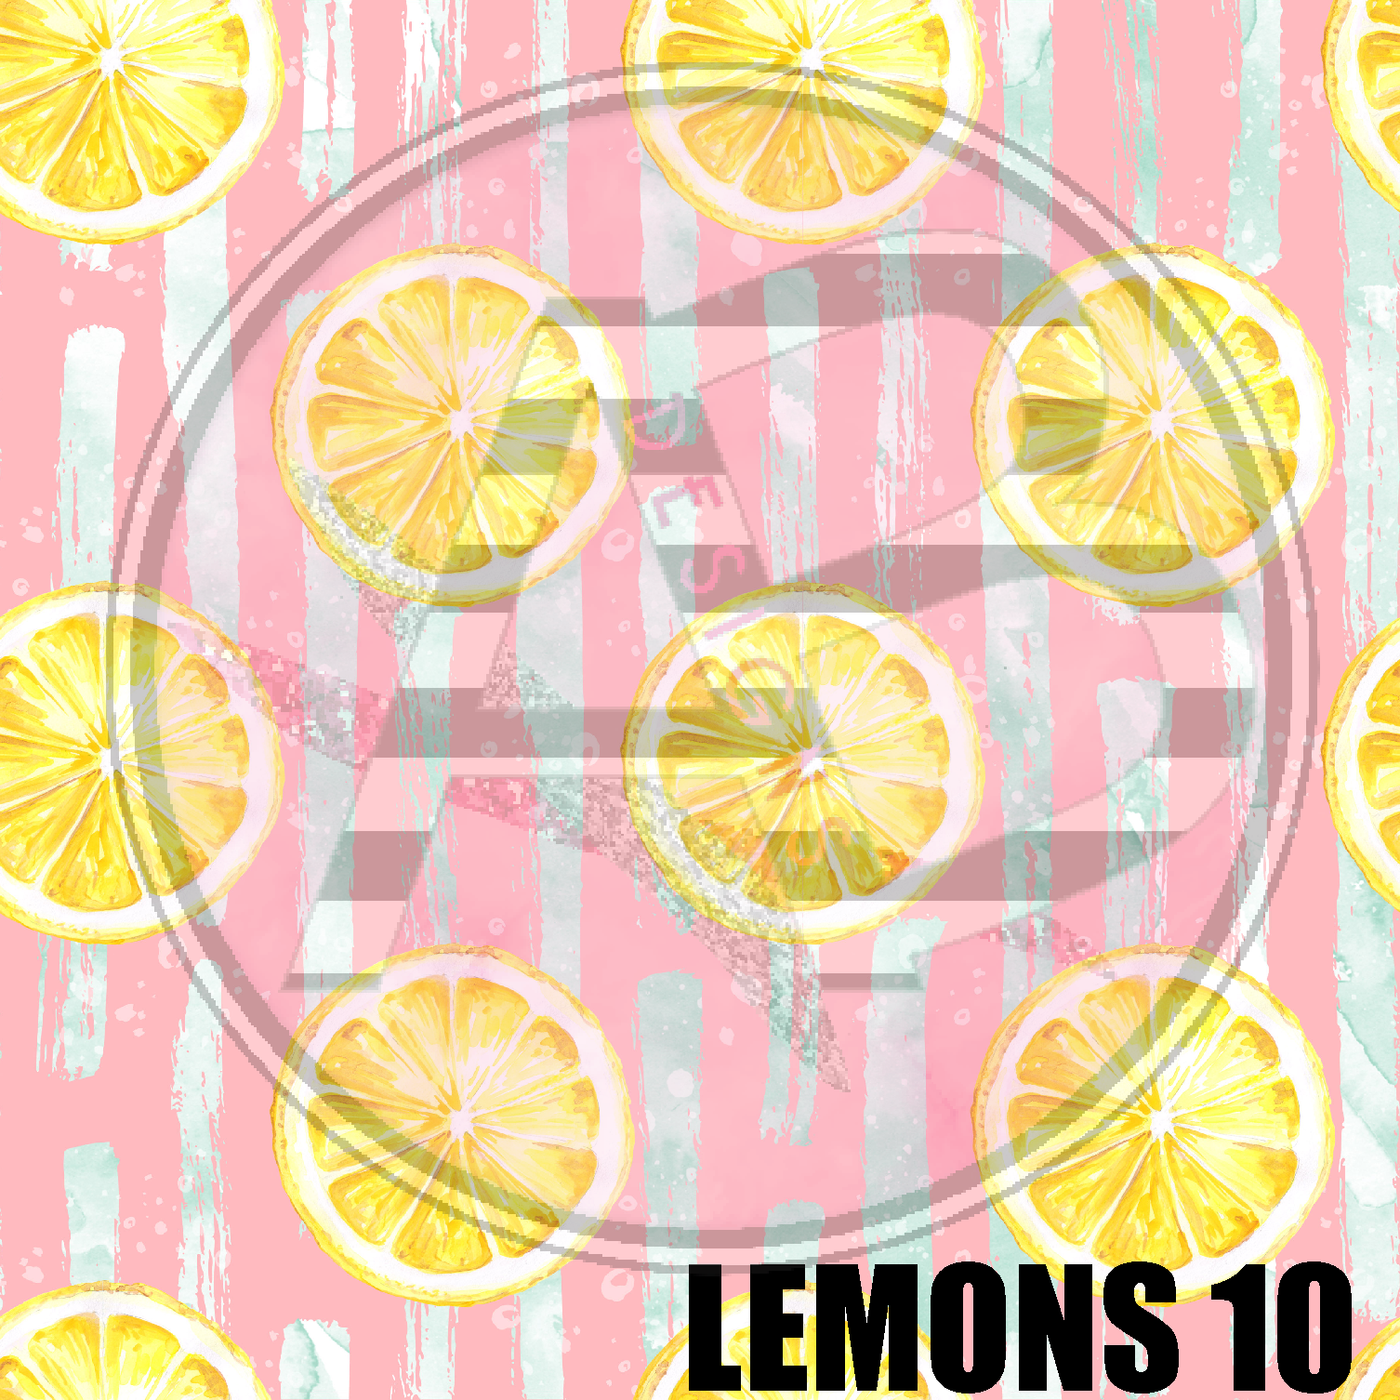 Adhesive Patterned Vinyl - Lemons 10